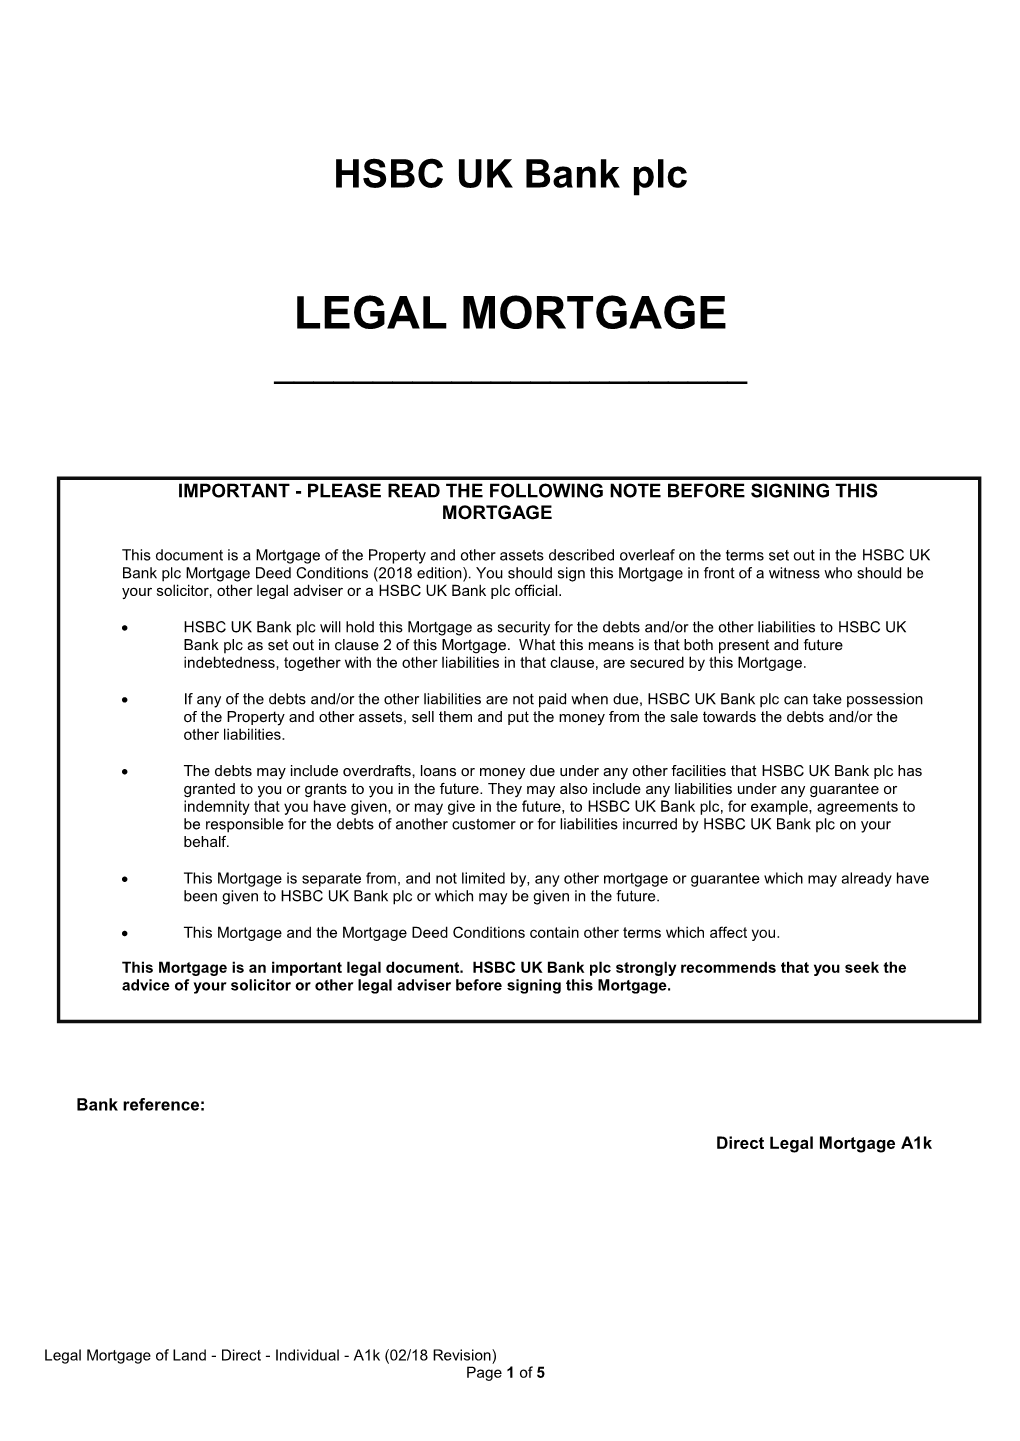 Legal Mortgage